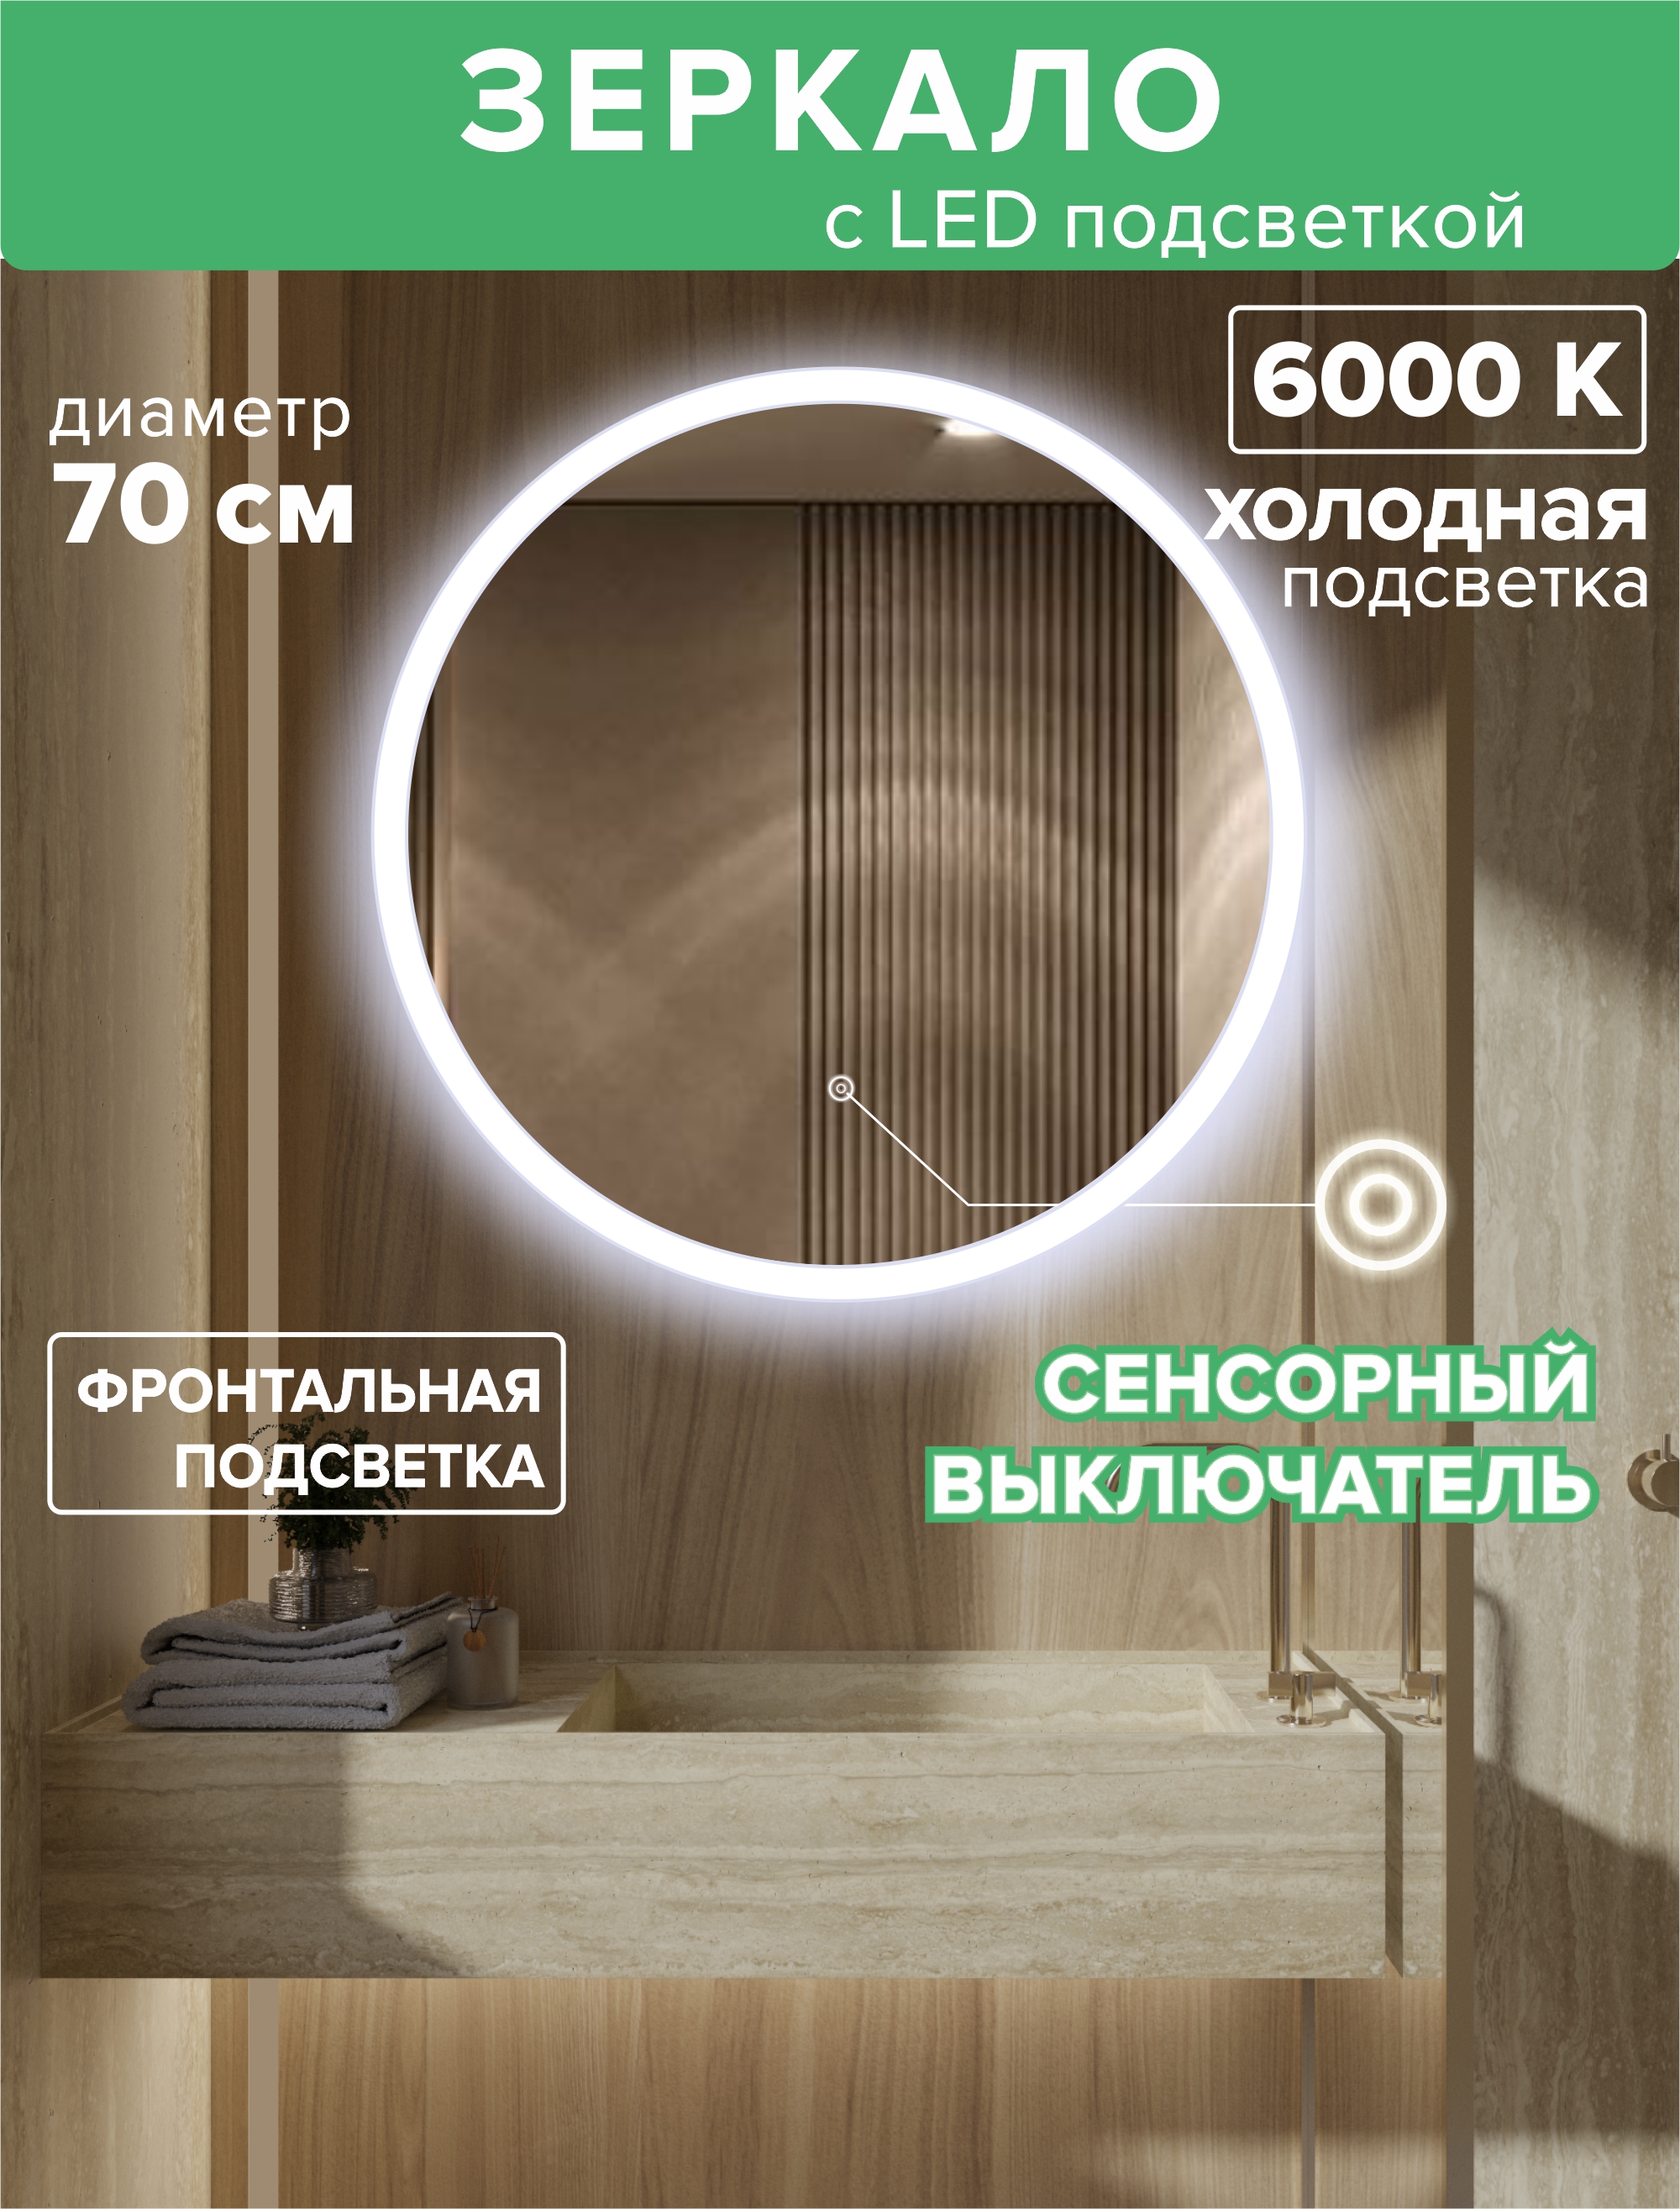 Зеркало для ванной Alfa Mirrors MSvet-7h фронтальная холодная подсветка 6000К, круг 70 см